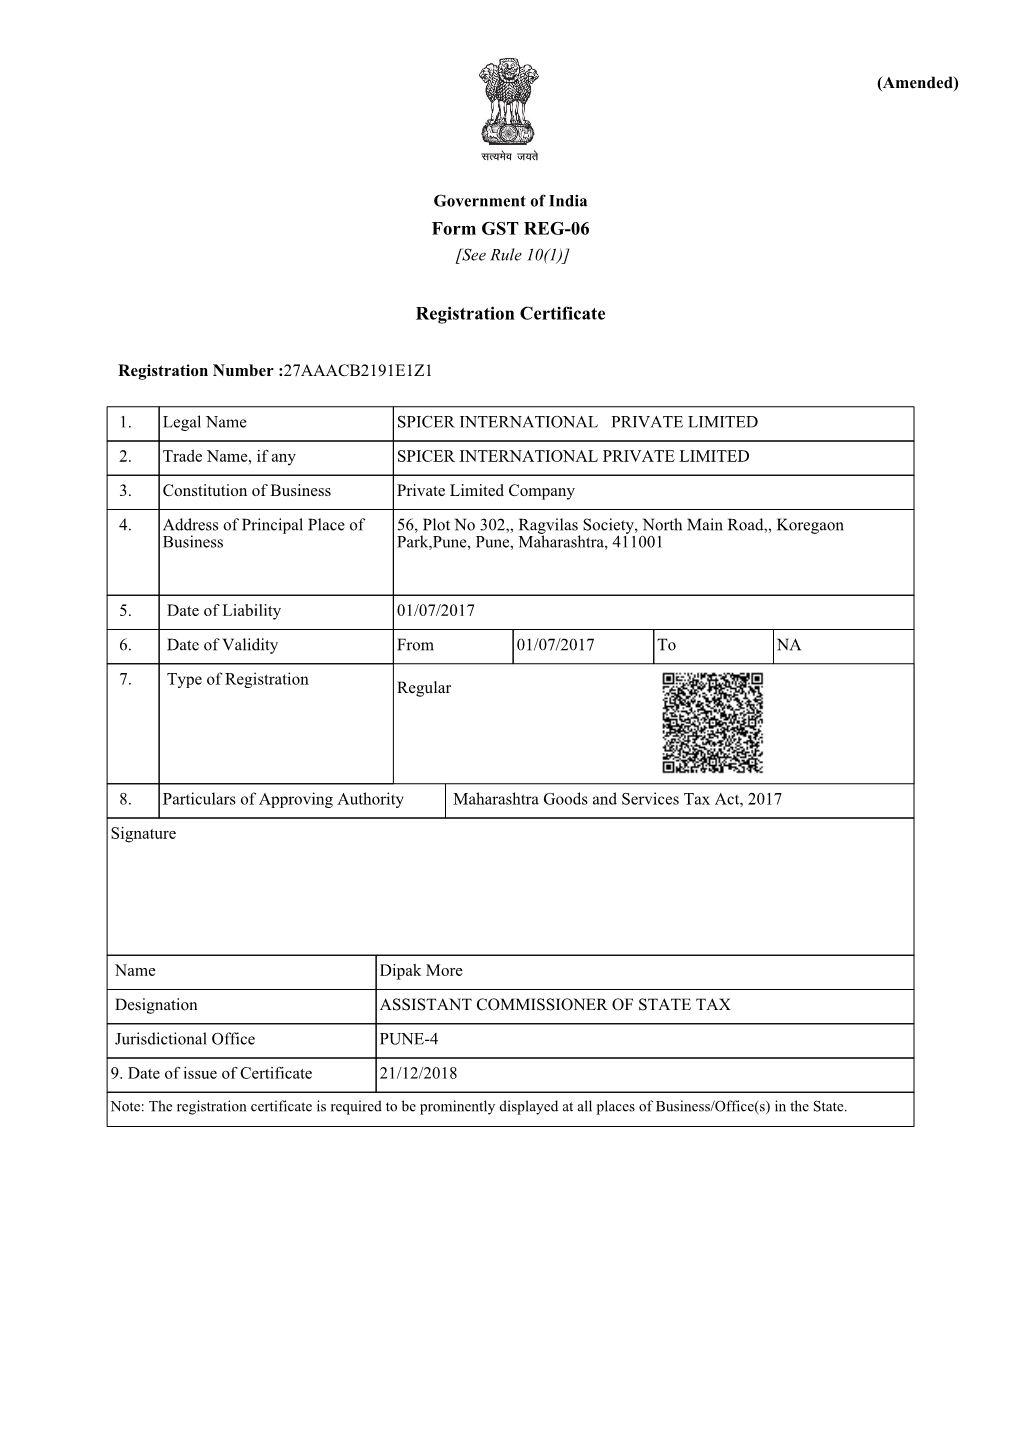 Form GST REG-06 Registration Certificate